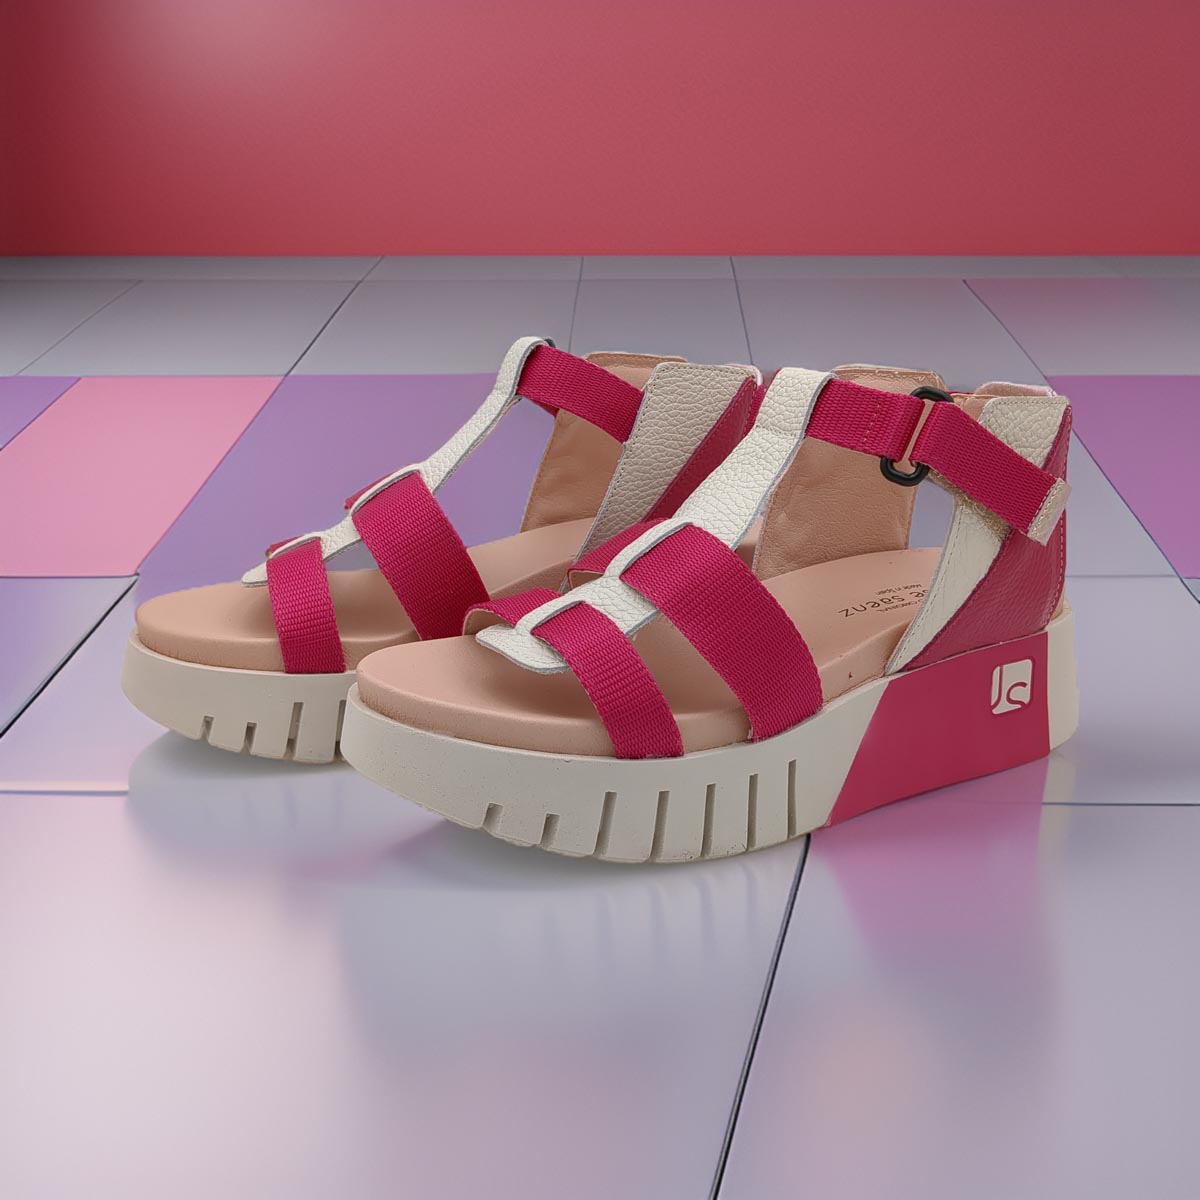 Jose Saenz Pink Luxury Gladiator Sandals - Chic Leather Summer Footwear